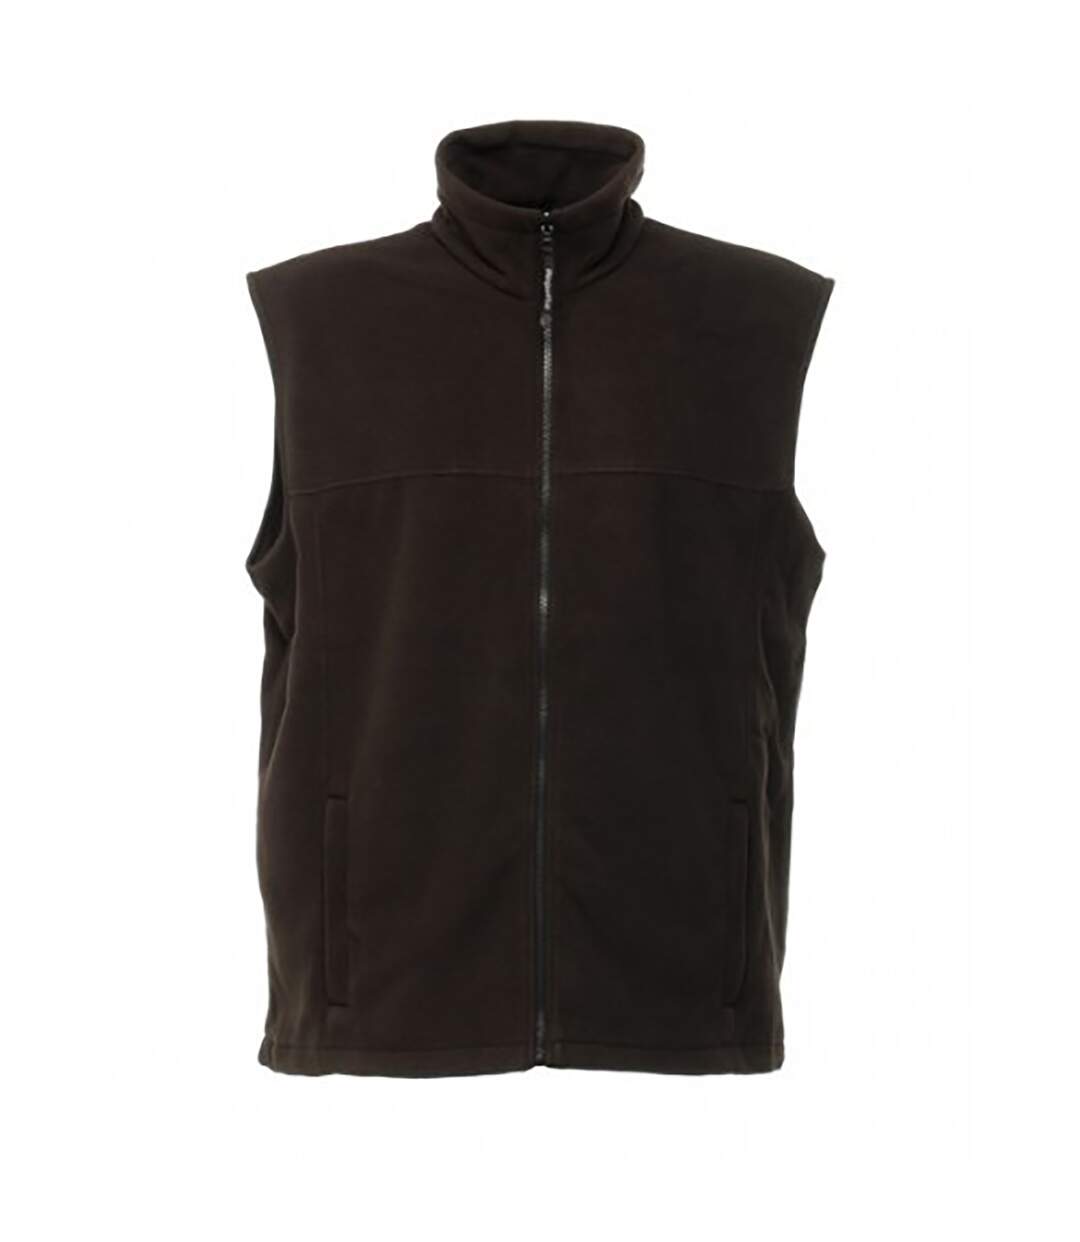 Regatta Haber II Full-Zip Bodywarmer Fleece Anti-Pill Jacket (250 GSM) (Black) - UTBC819